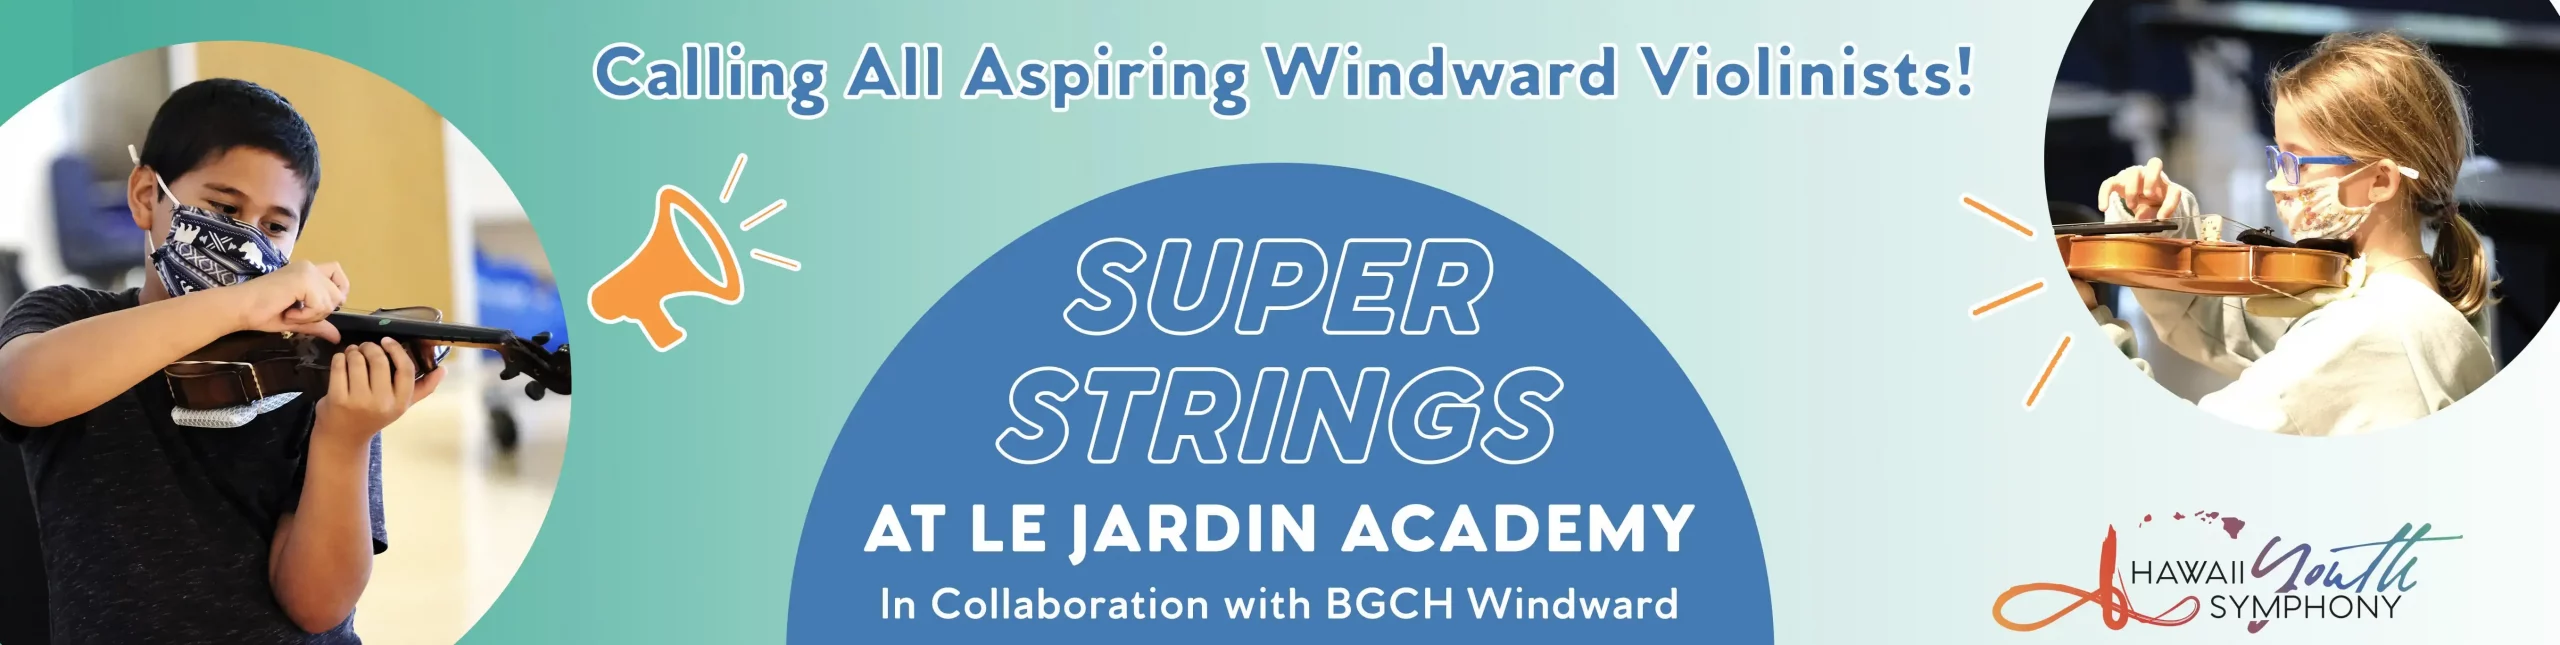 Super Strings at Le Jardin Academy